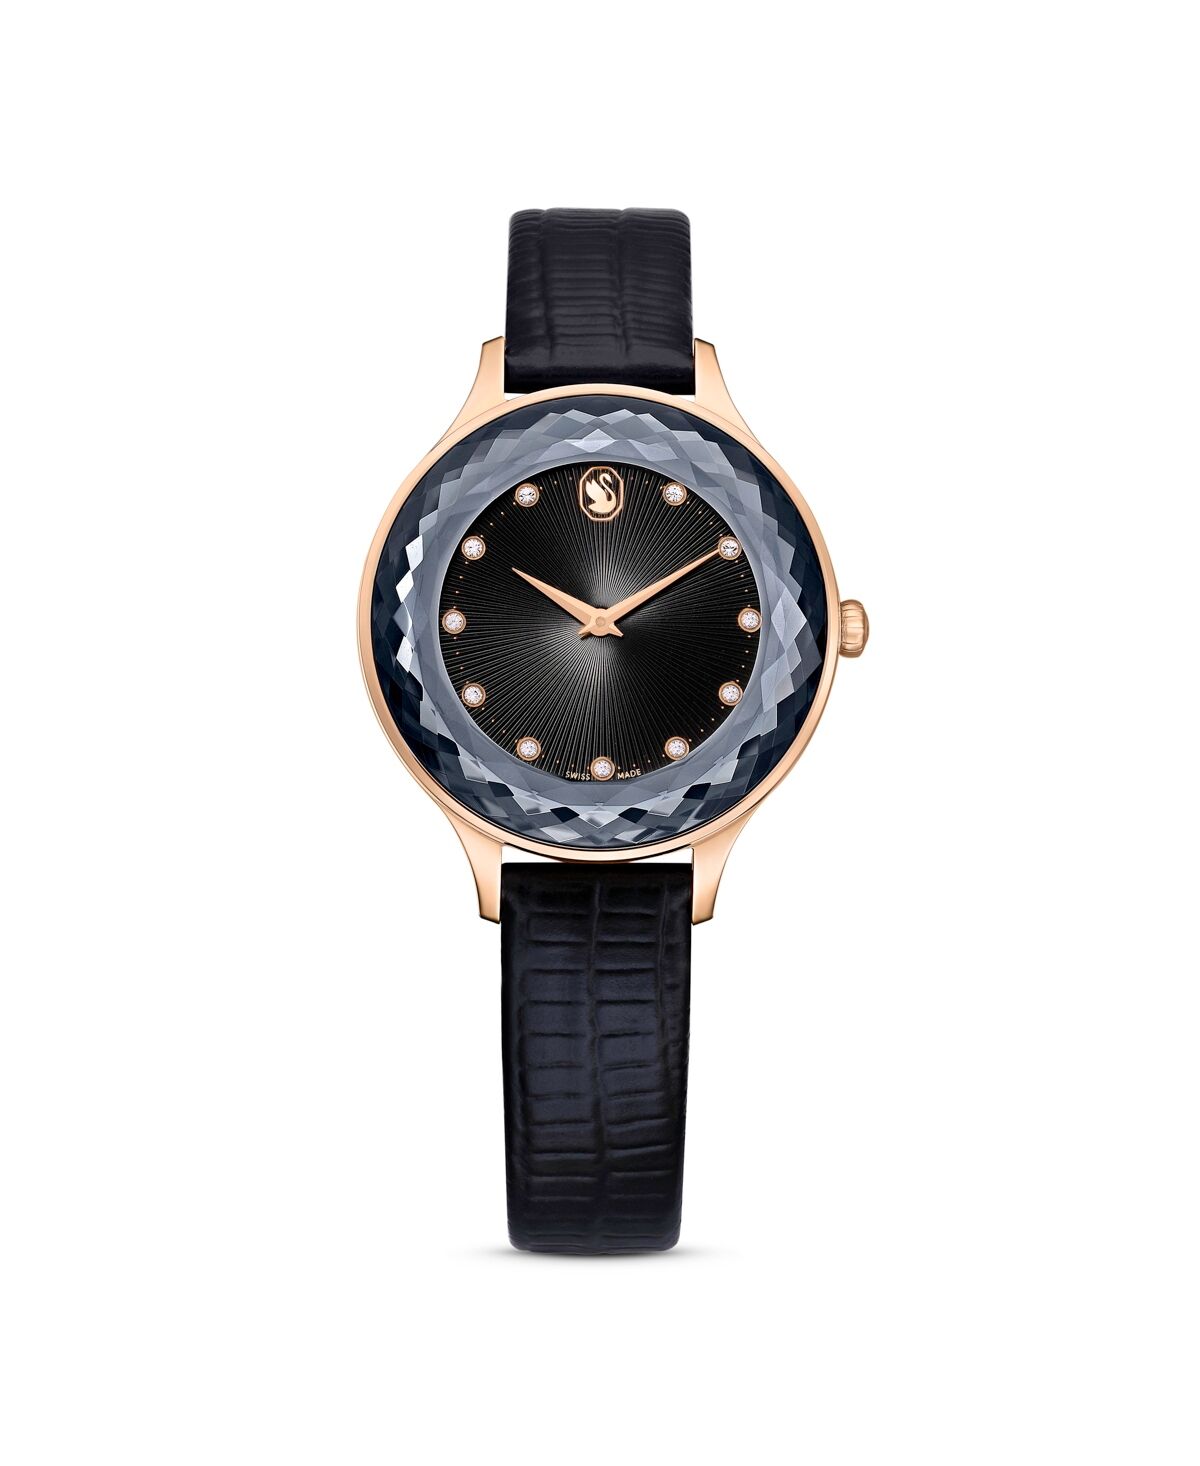 Swarovski Women's Analog Swiss Made Octea Nova Black Leather Strap Watch, 33mm - Black